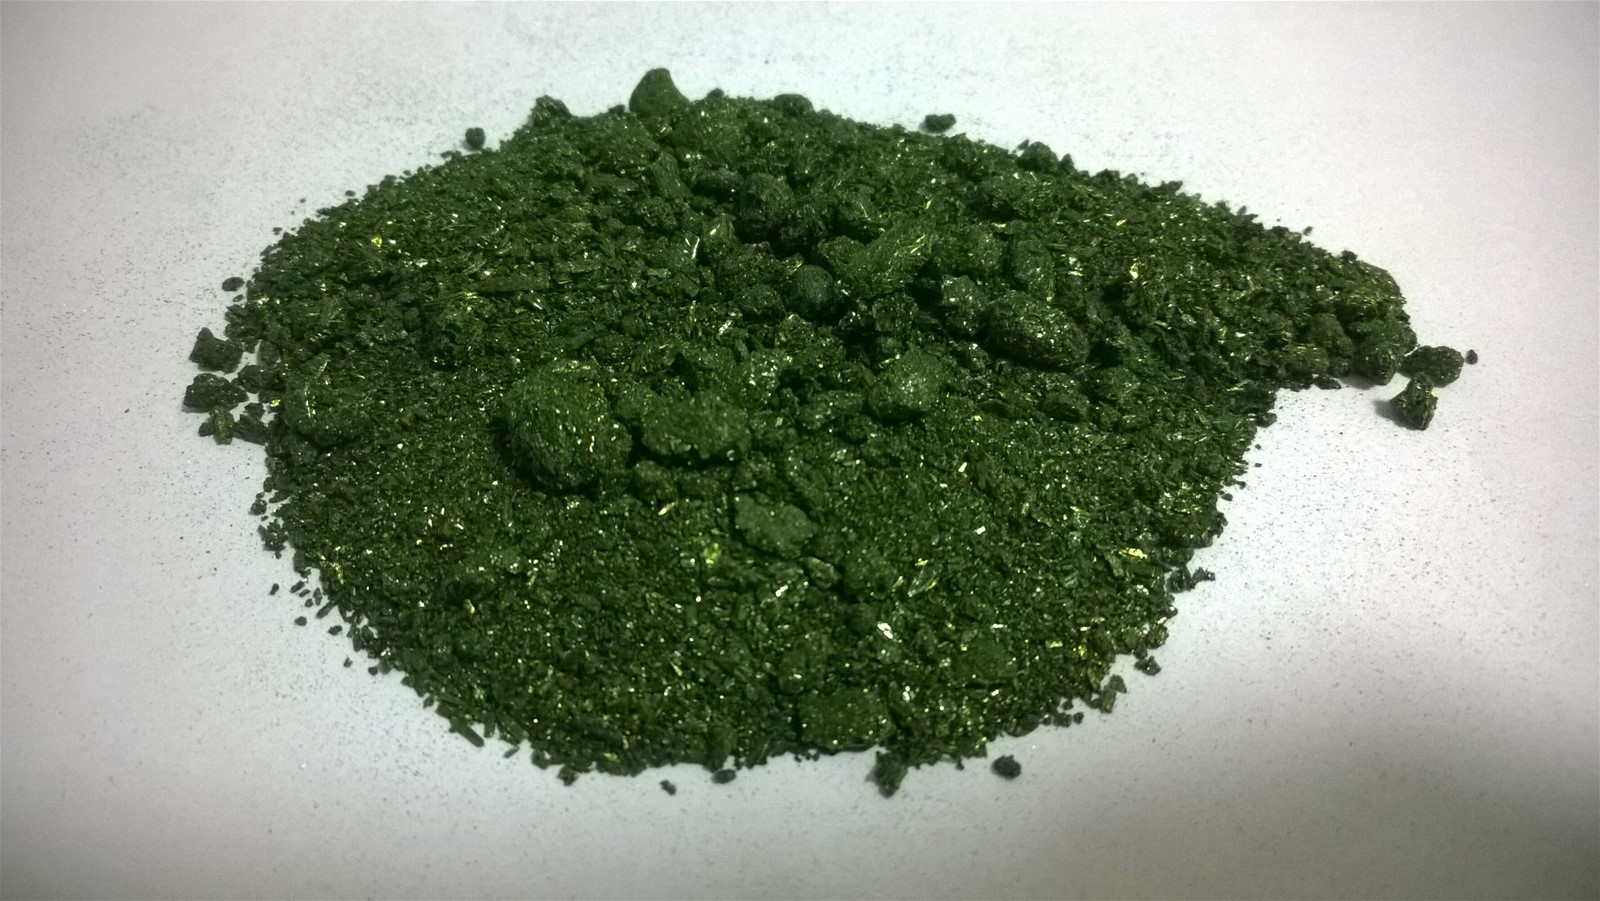 basic green 4 , crystal malachite green, CAS NO 2437-29-8